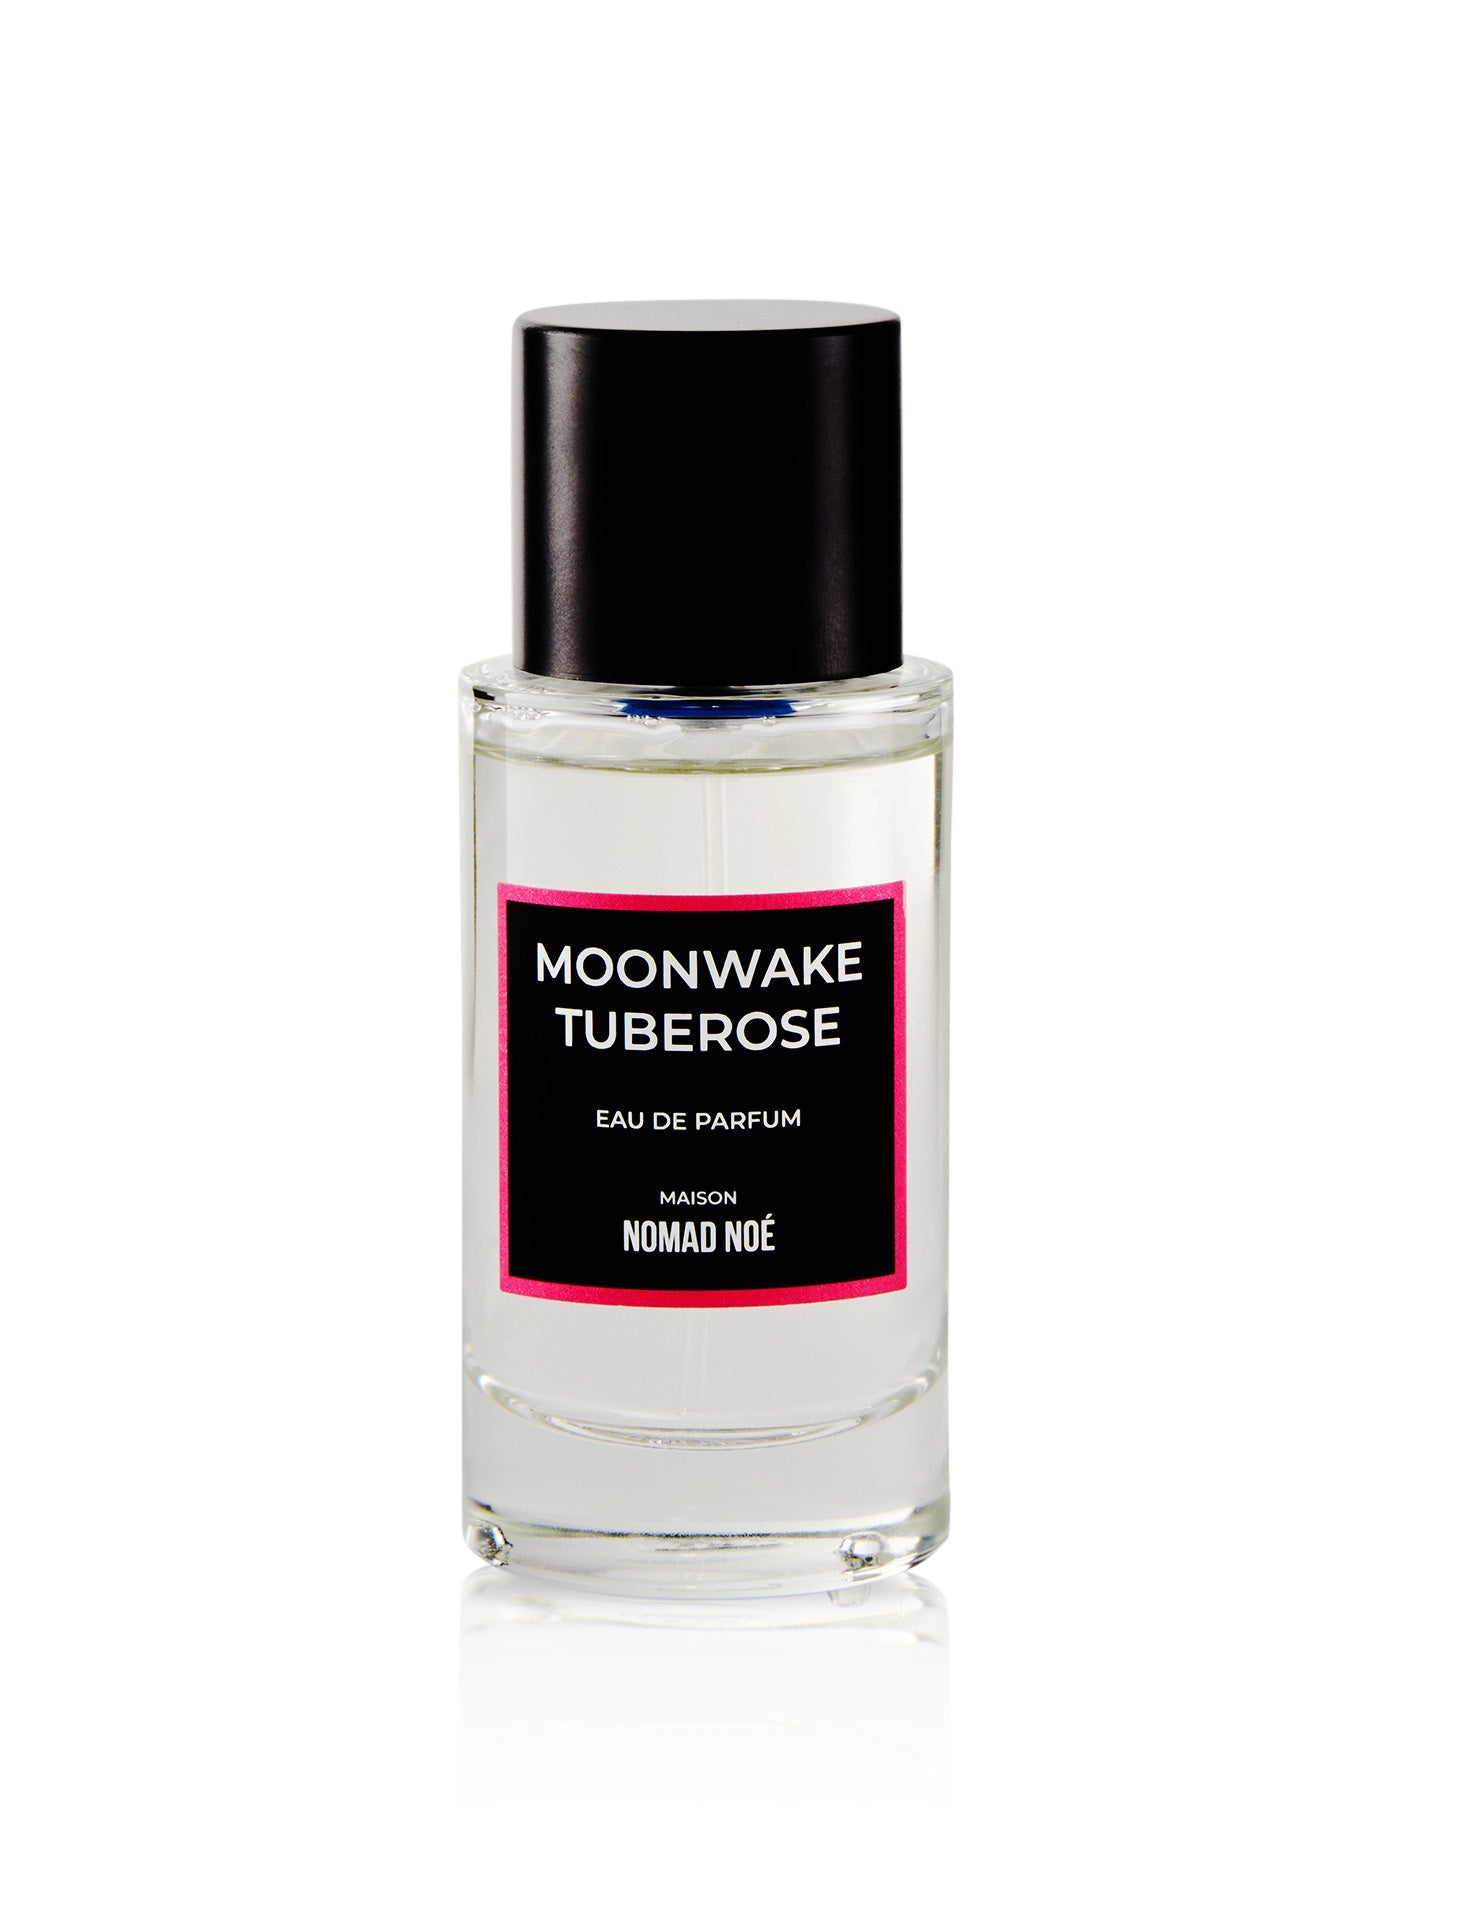 Moonwake Tuberose Eau de Parfum